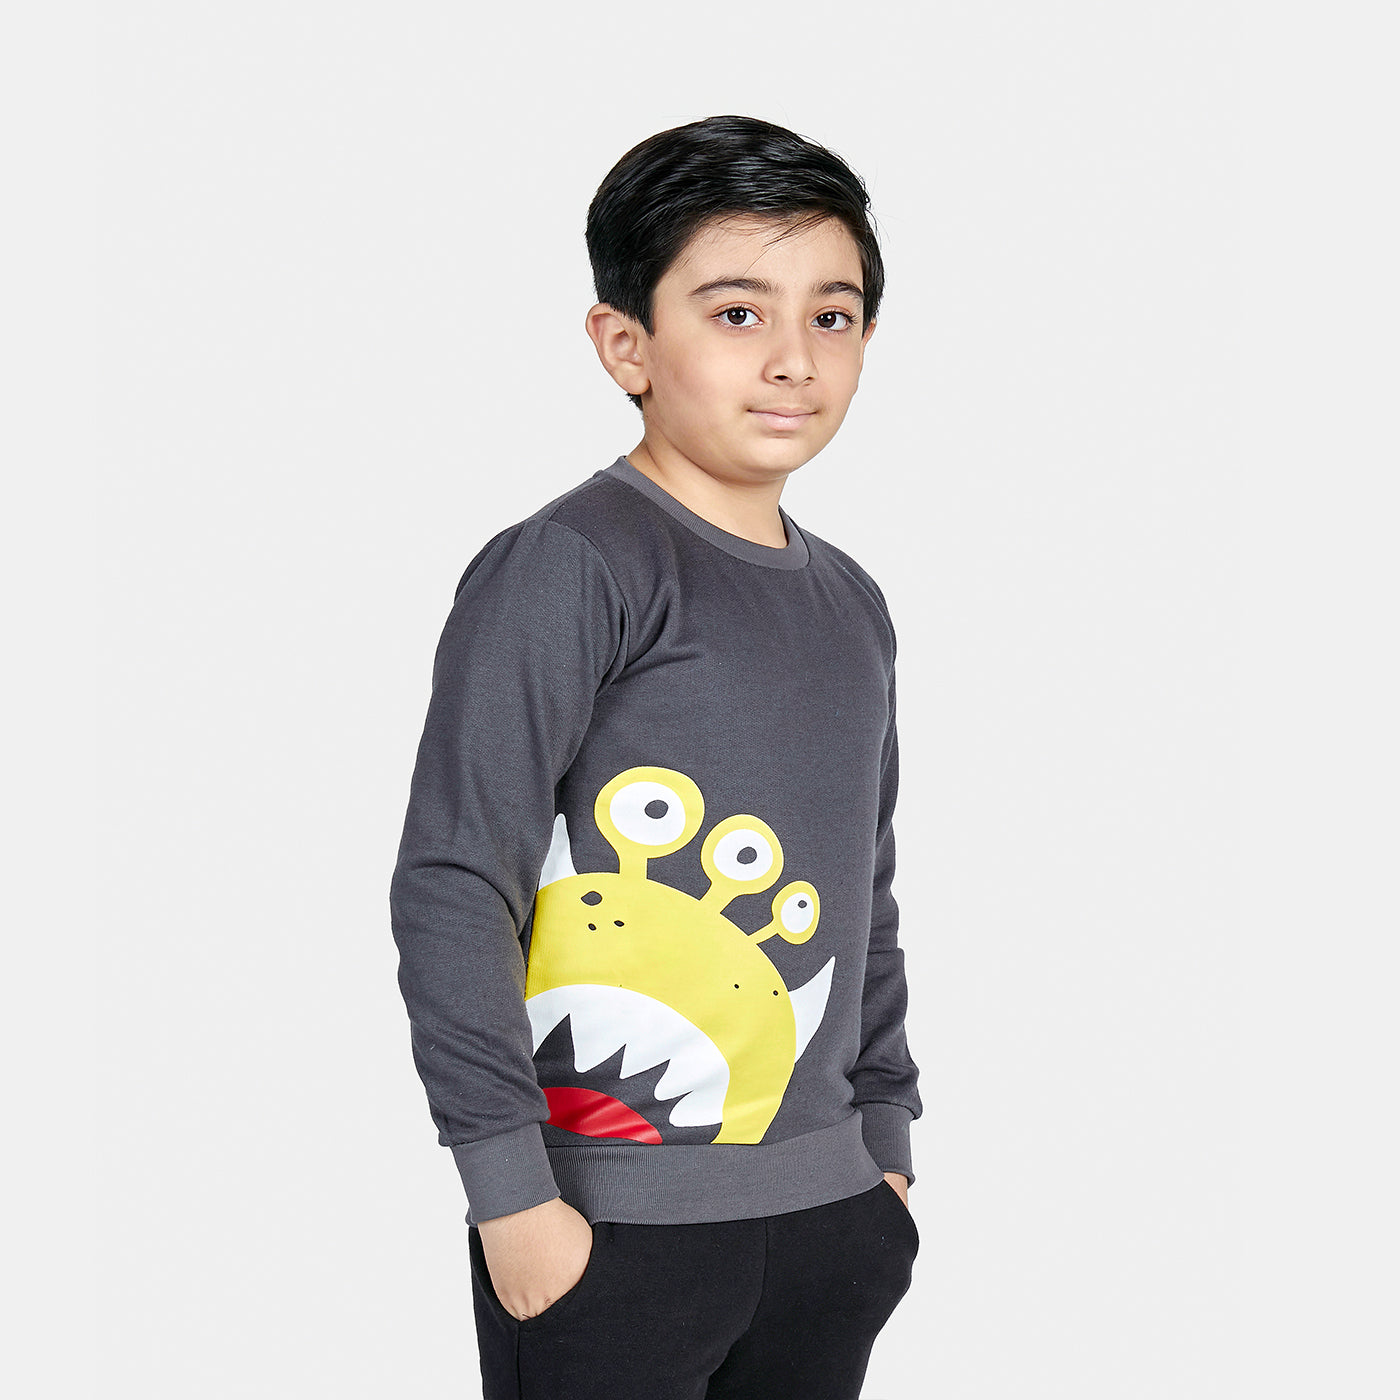 Sweatshirt for boys in Lahore